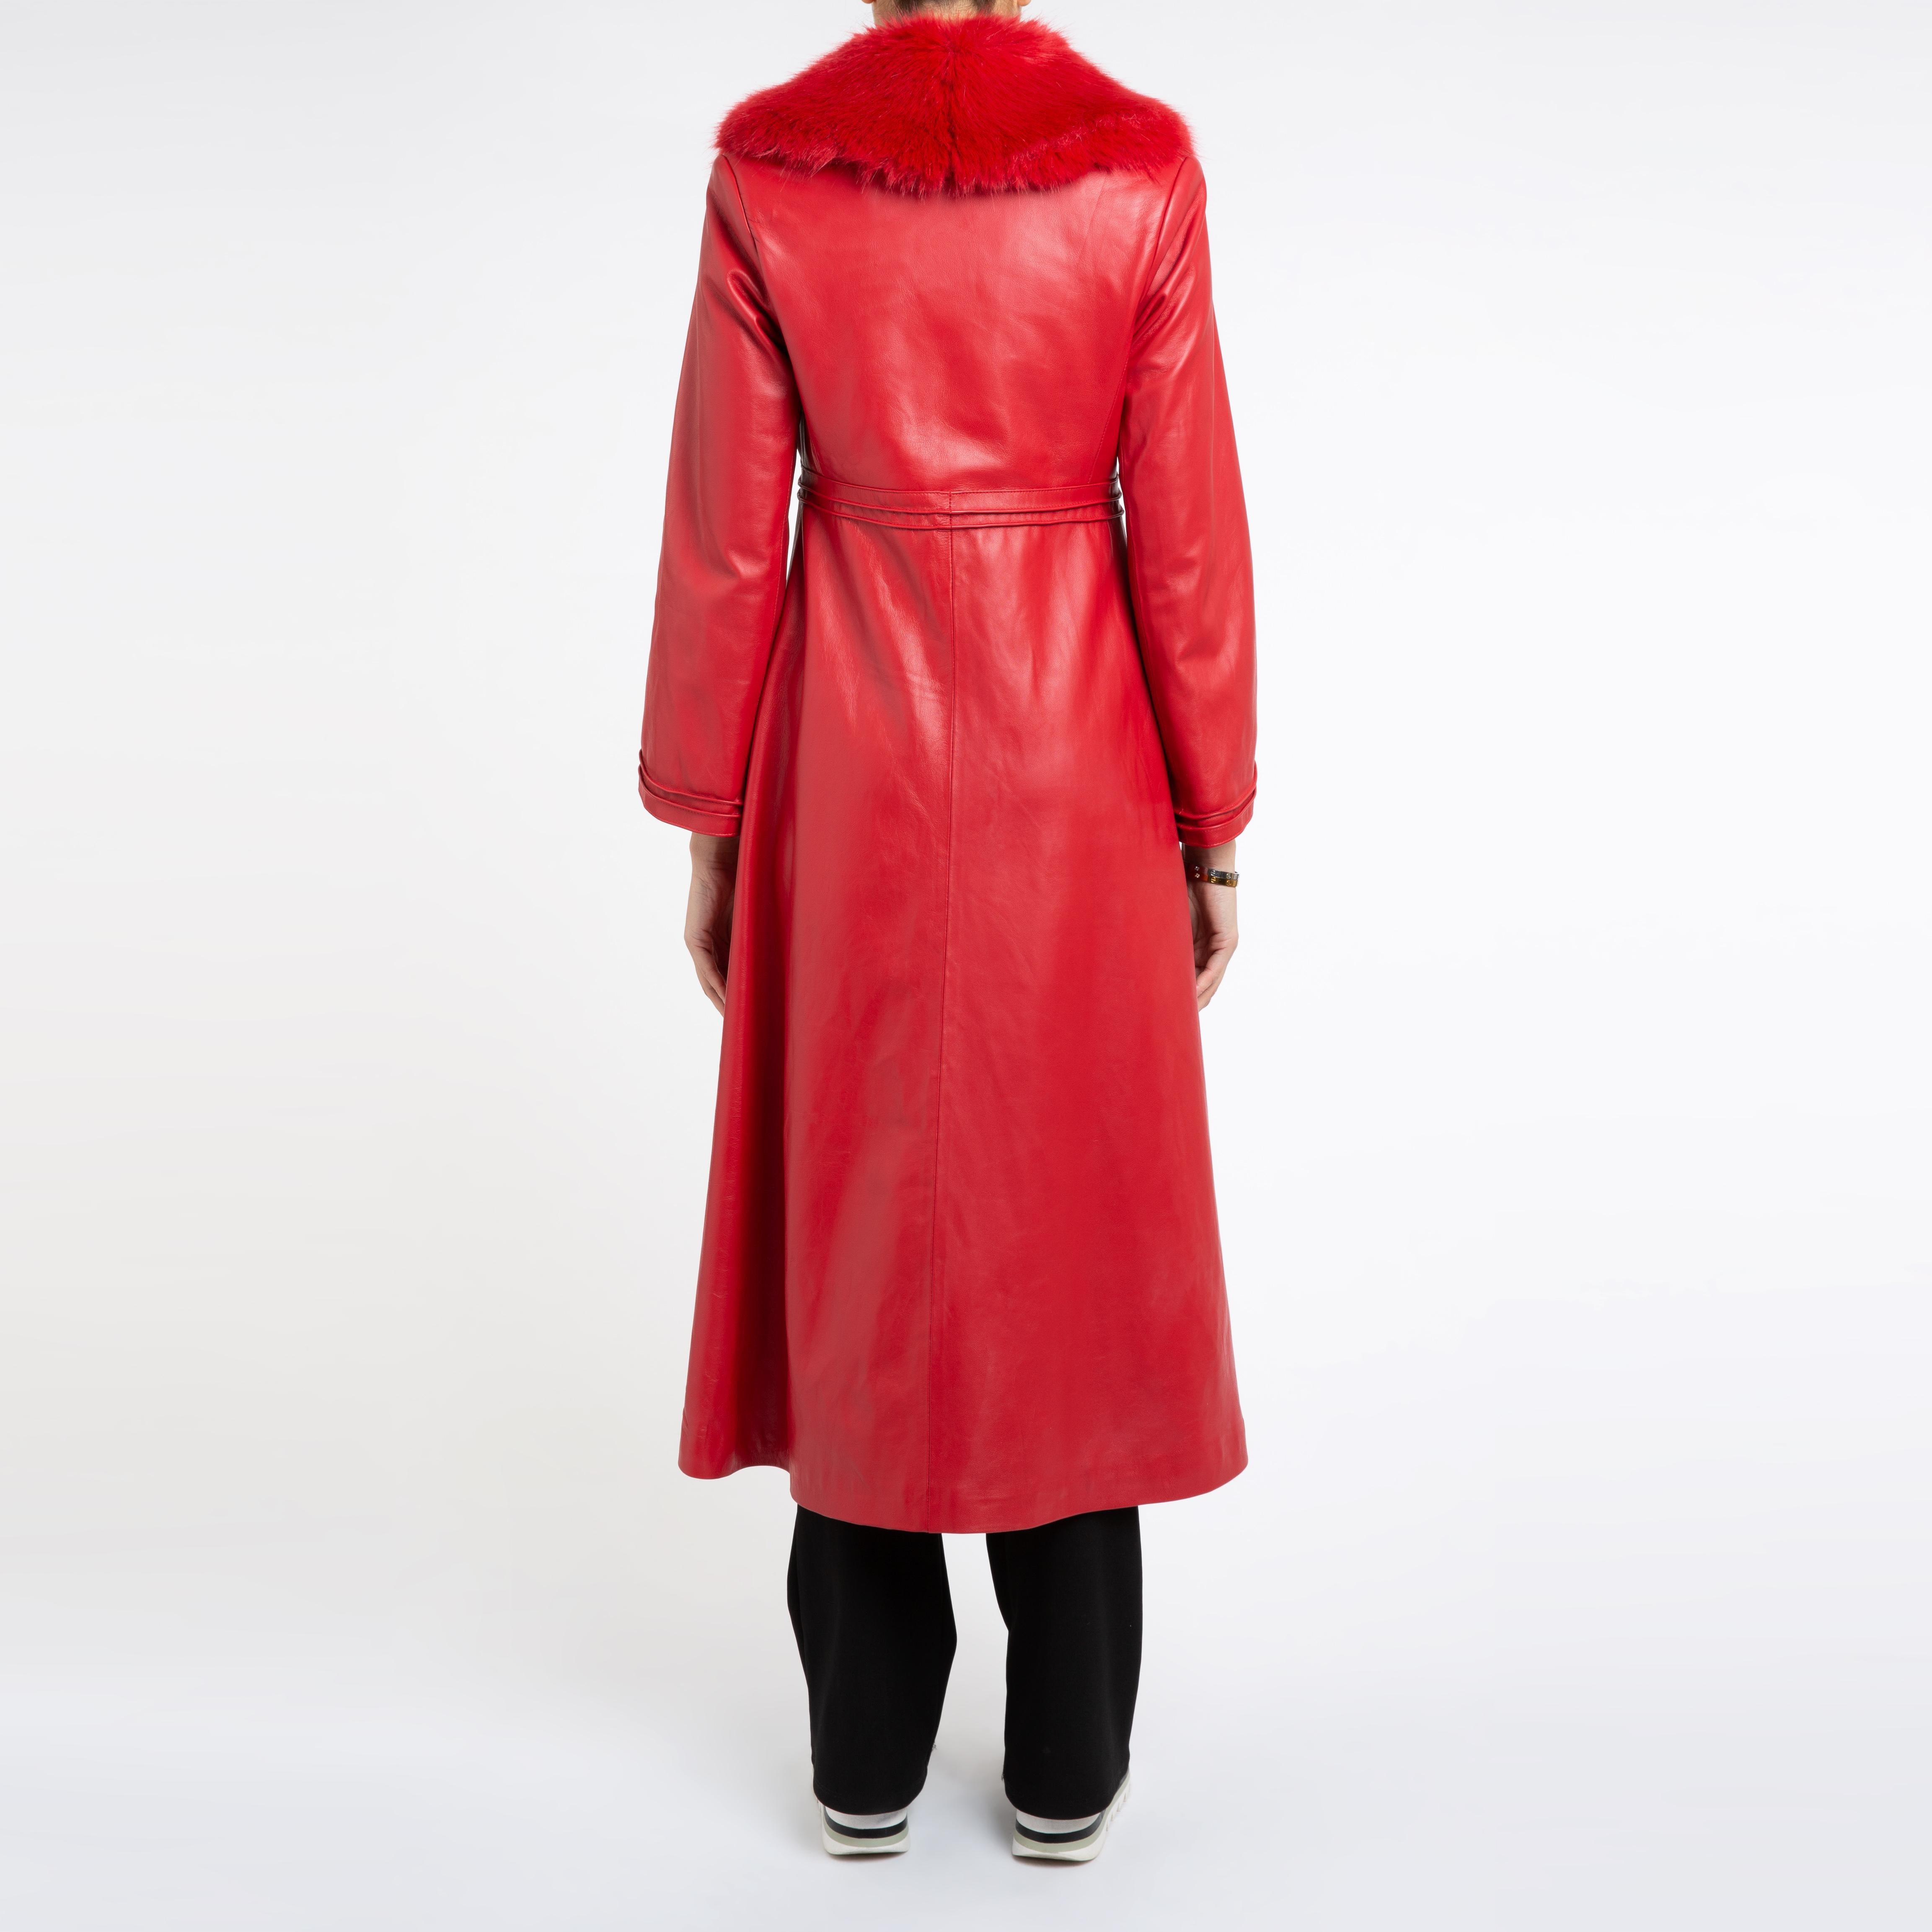 Verheyen London Edward Leather Coat with Faux Fur Collar in Red - Size uk 12 7